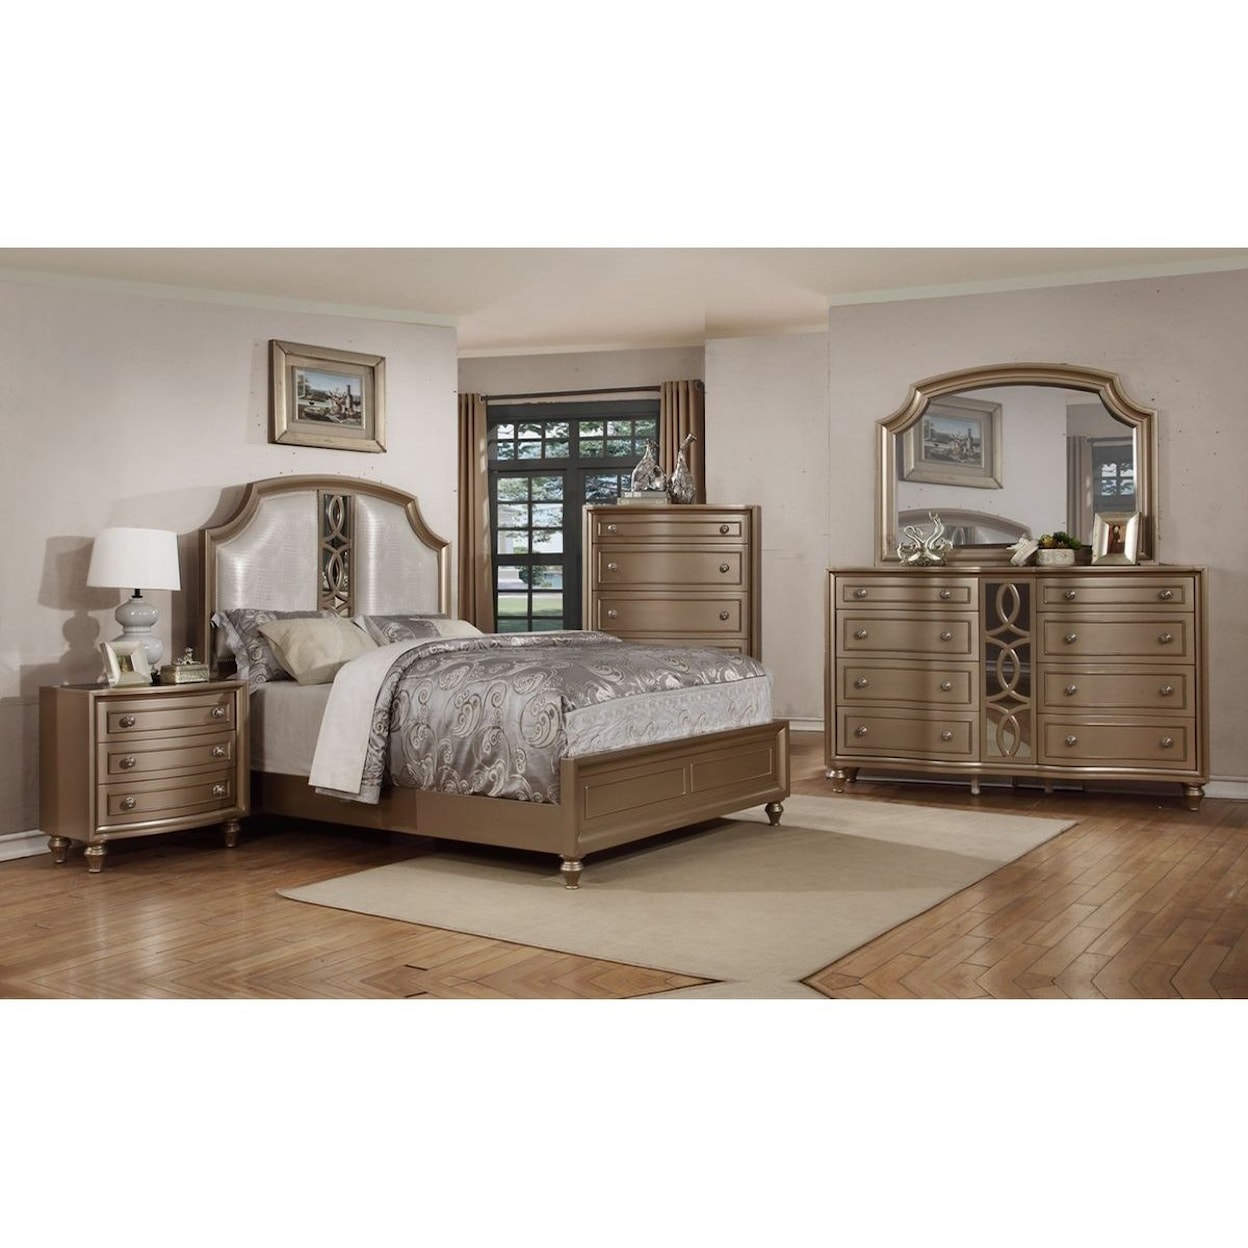 Avalon Furniture Regency Gold Queen Bedroom Group